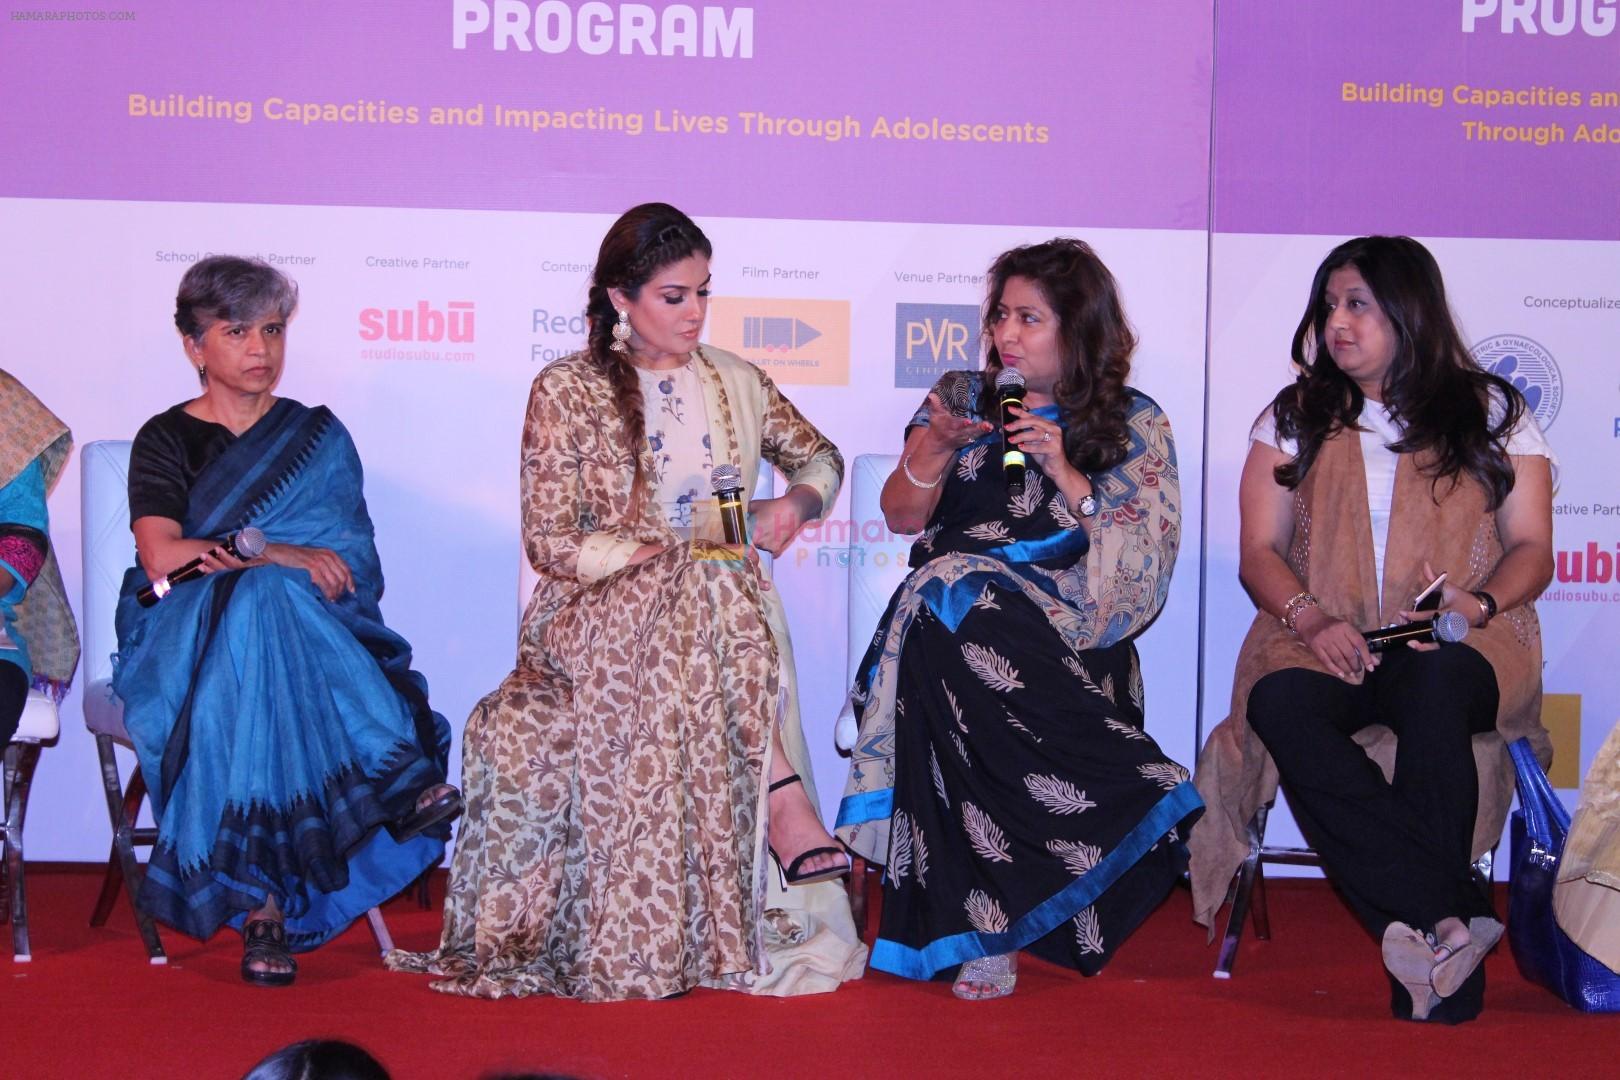 Raveena Tandon at the Launch Of New Initiative She's Ambassador Program